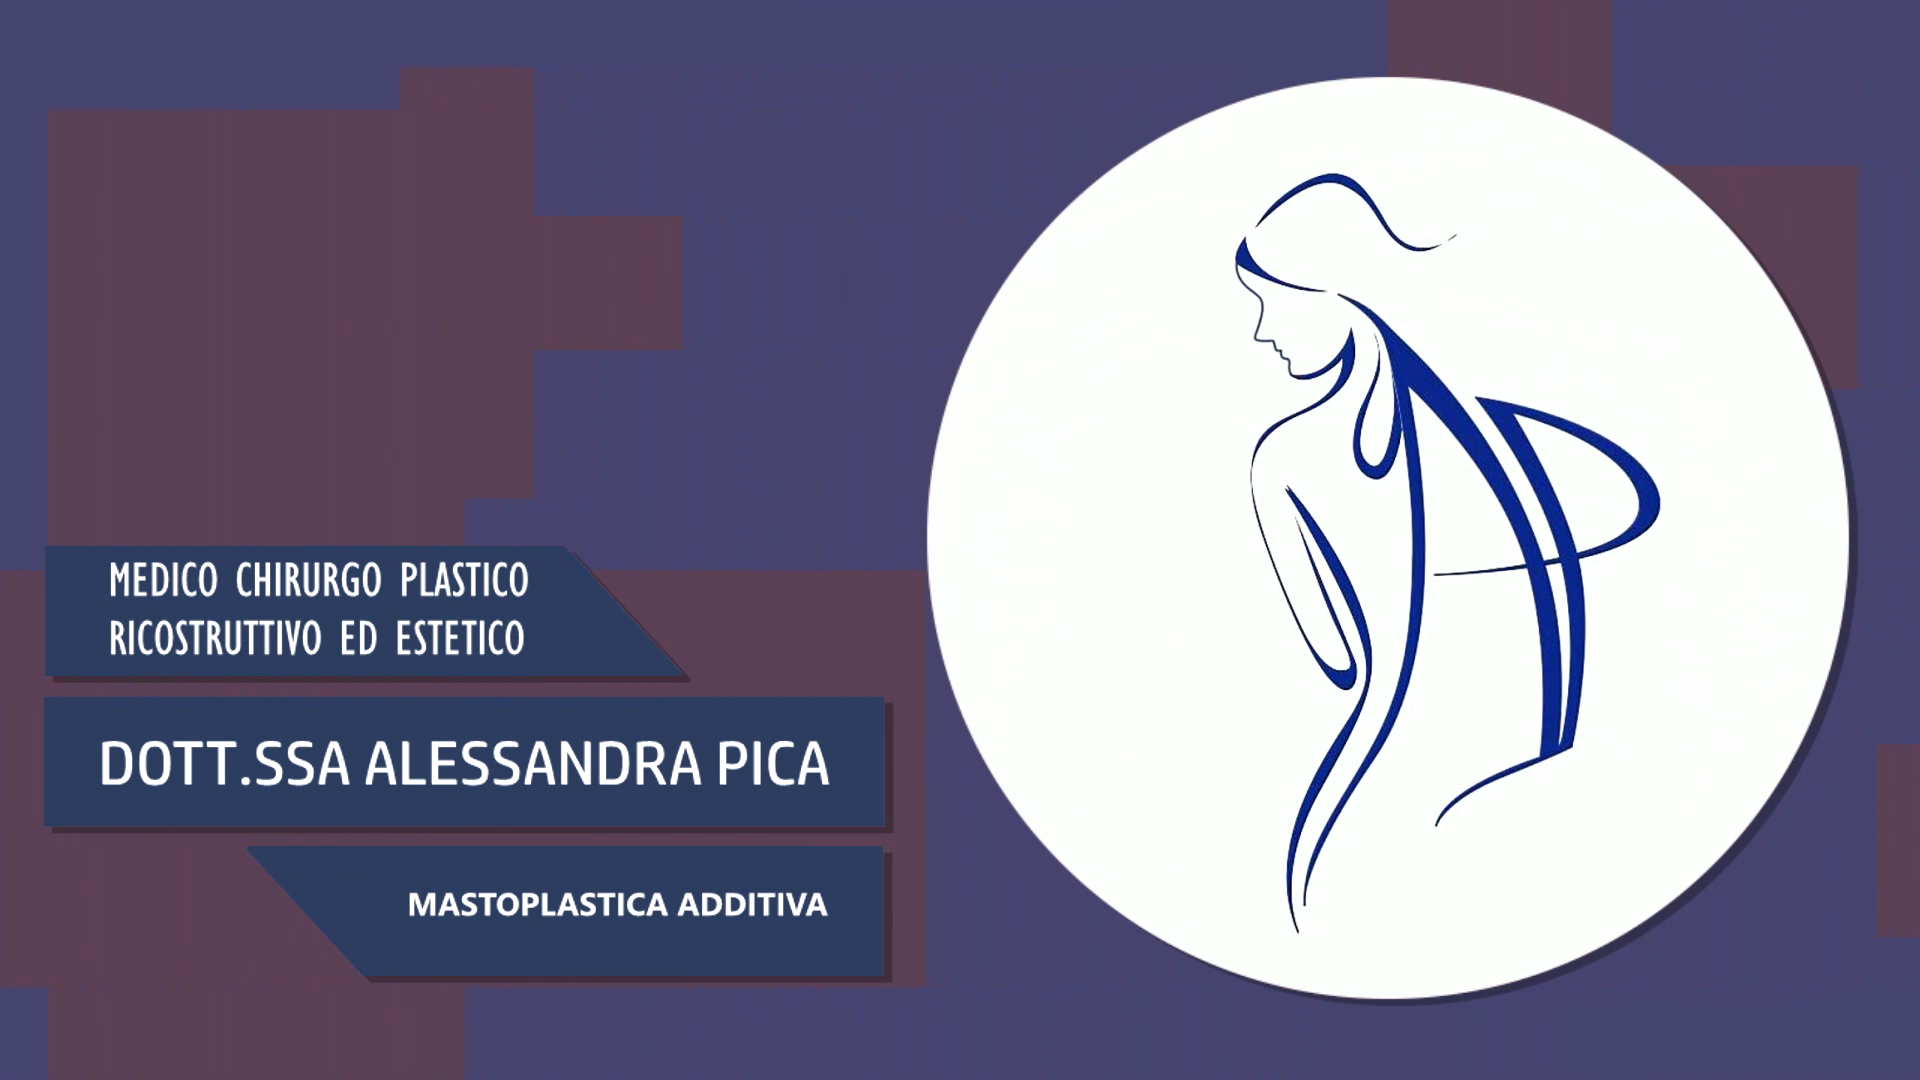 Dott.ssa Alessandra Pica – Mastoplastica Additiva